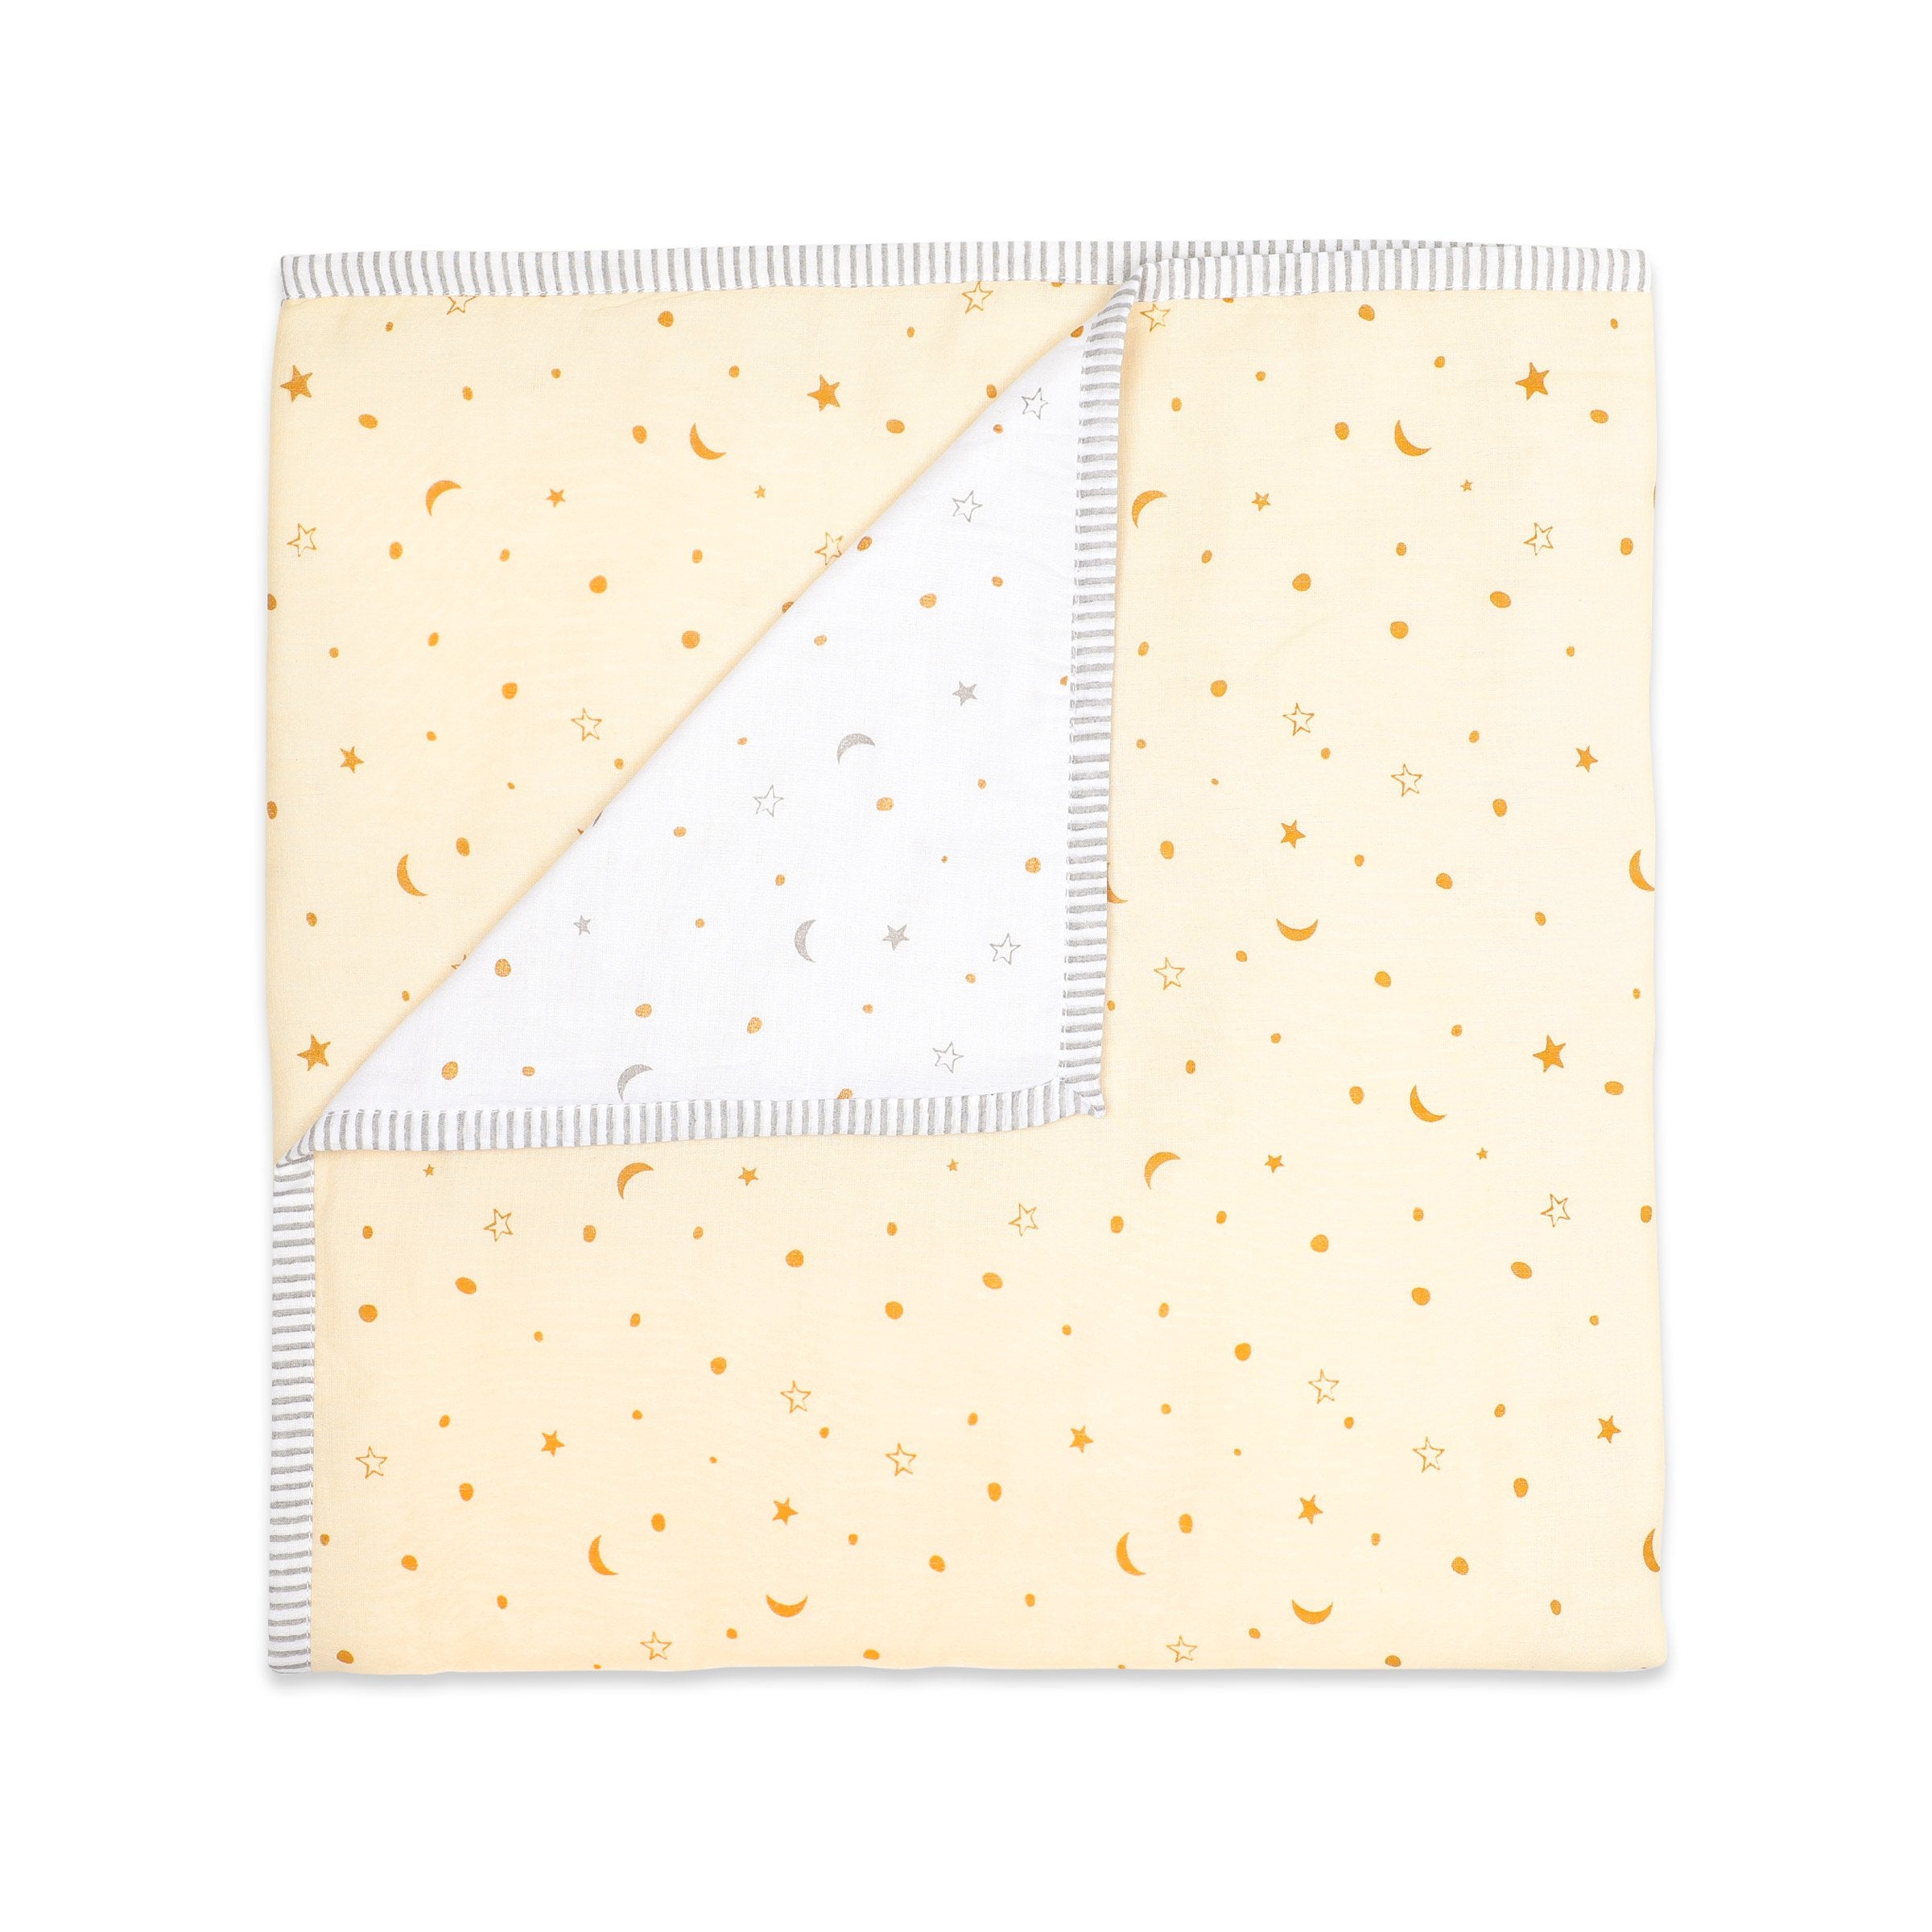 Masilo Organic Cotton Dohar Blanket - Starry Night (Cream)